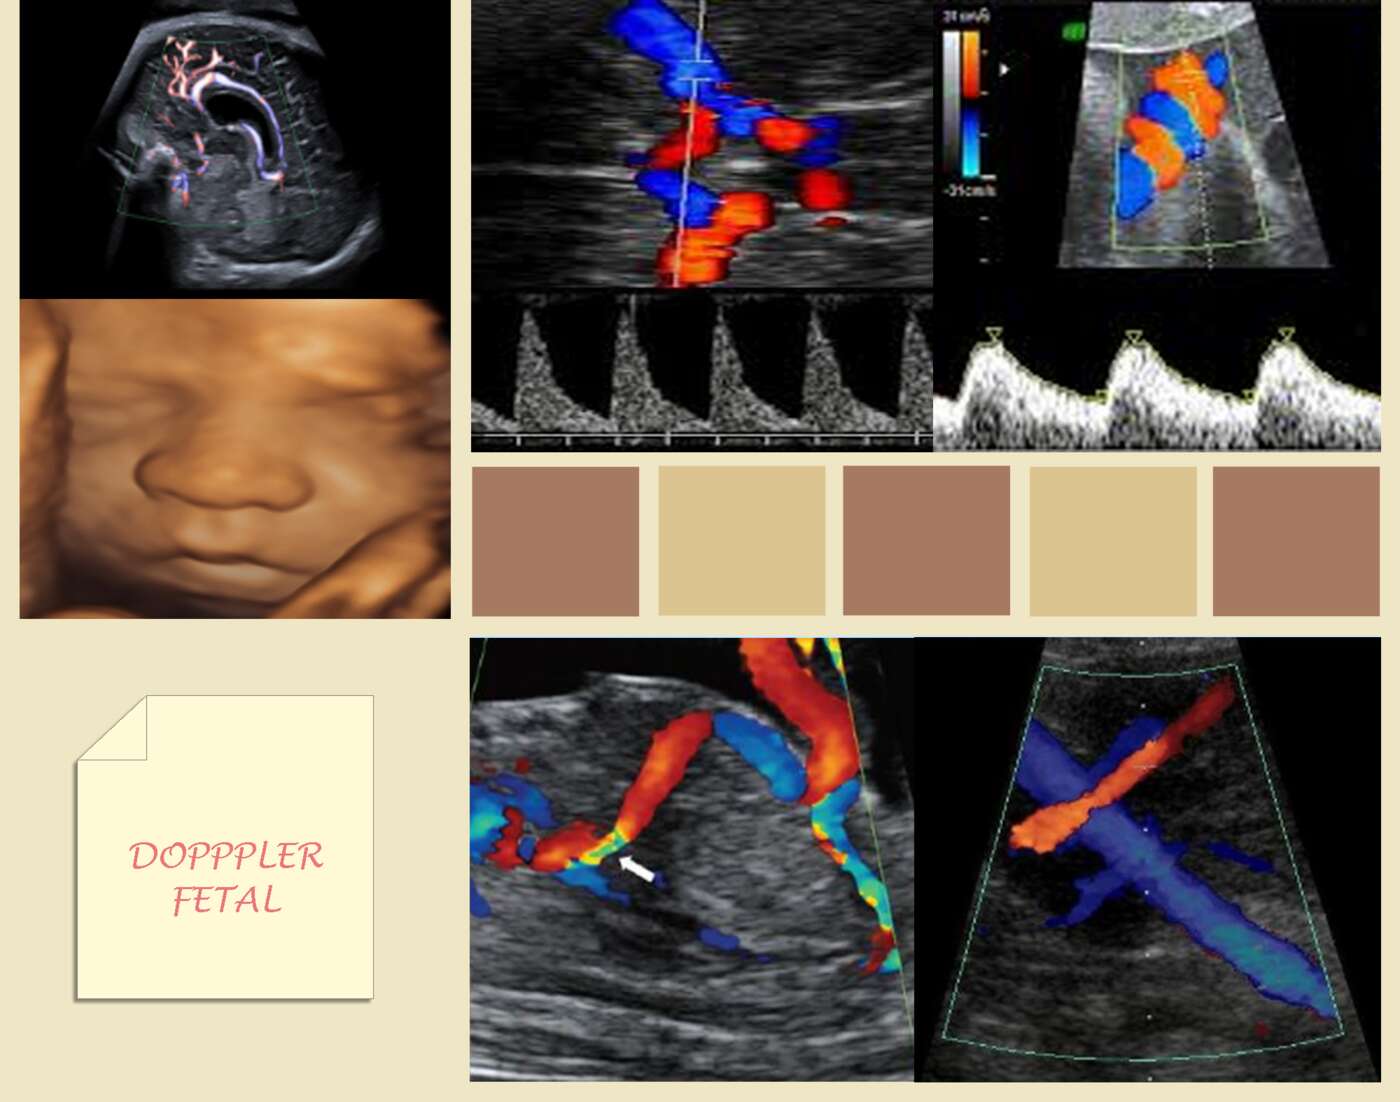 Doppler fetal - Placentario